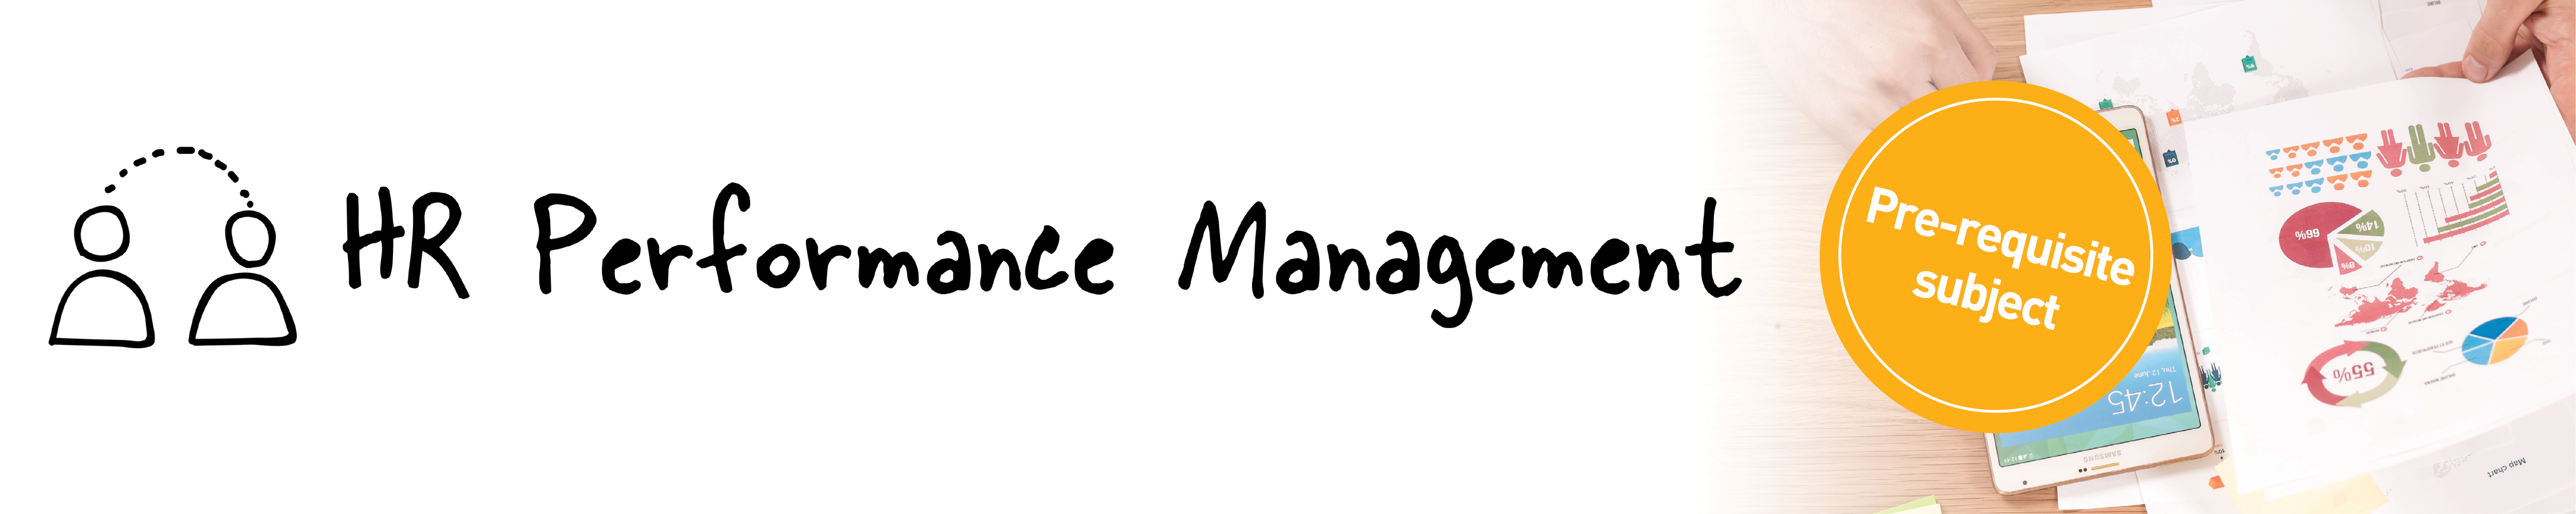 HR Performance Management